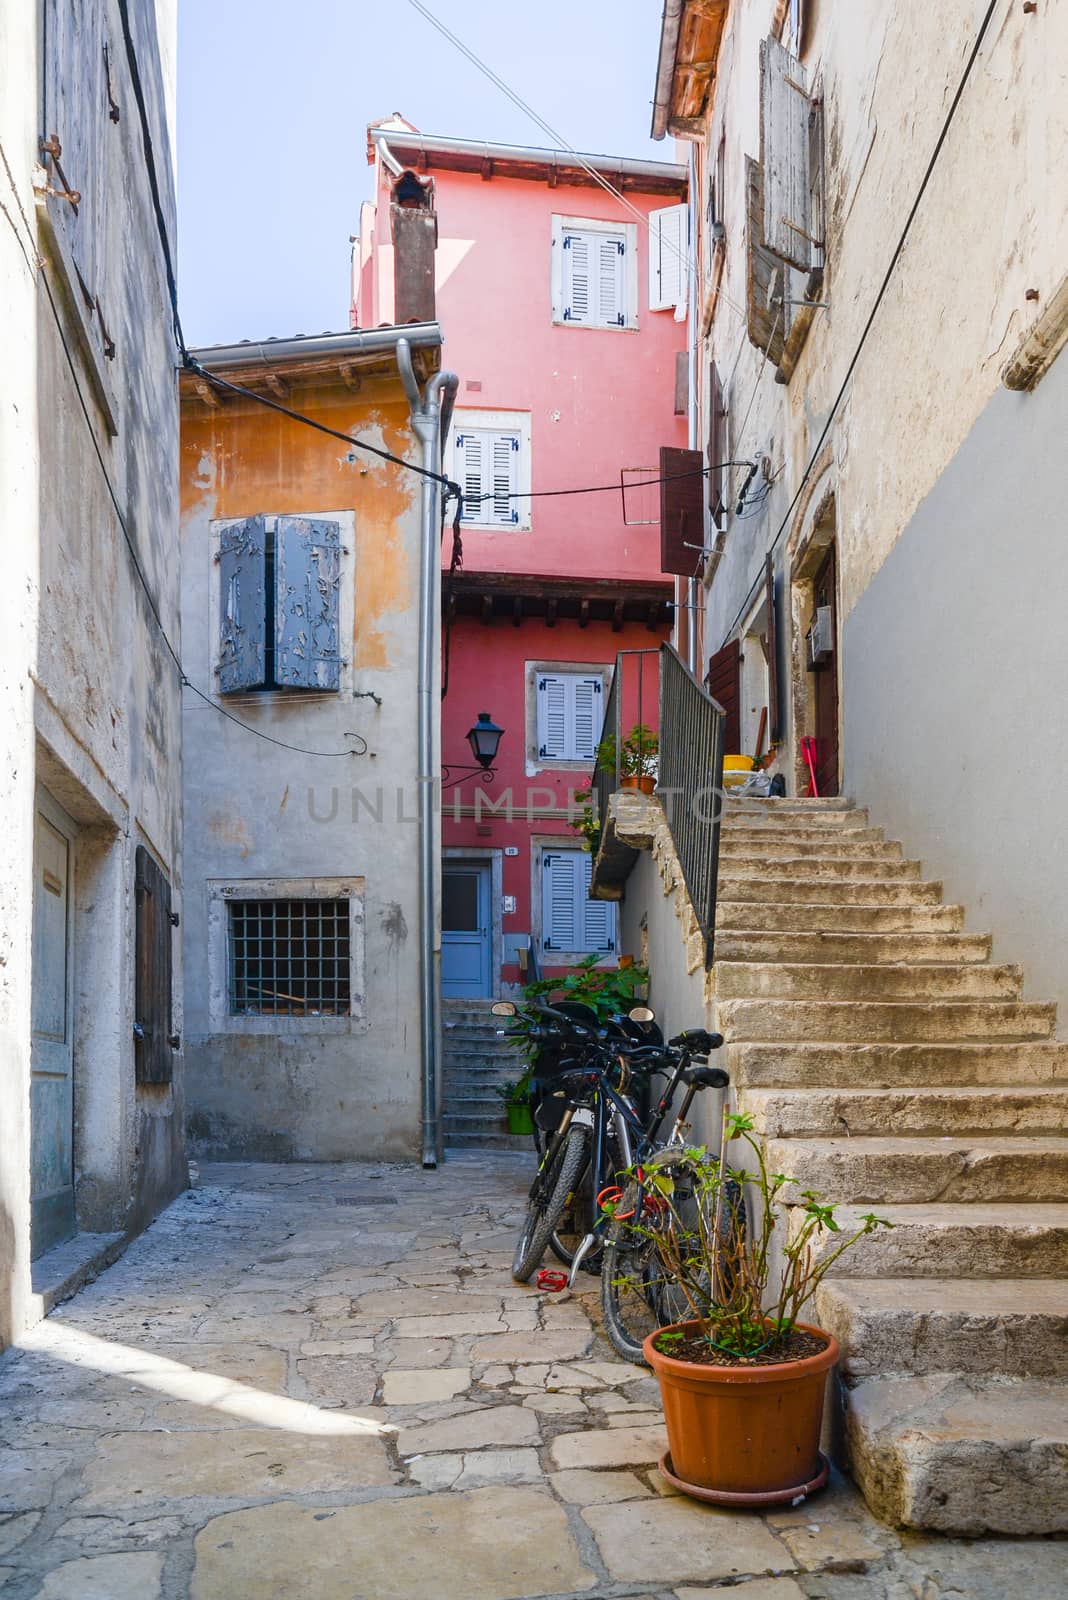 old town in Rovinj Croatia by vlaru